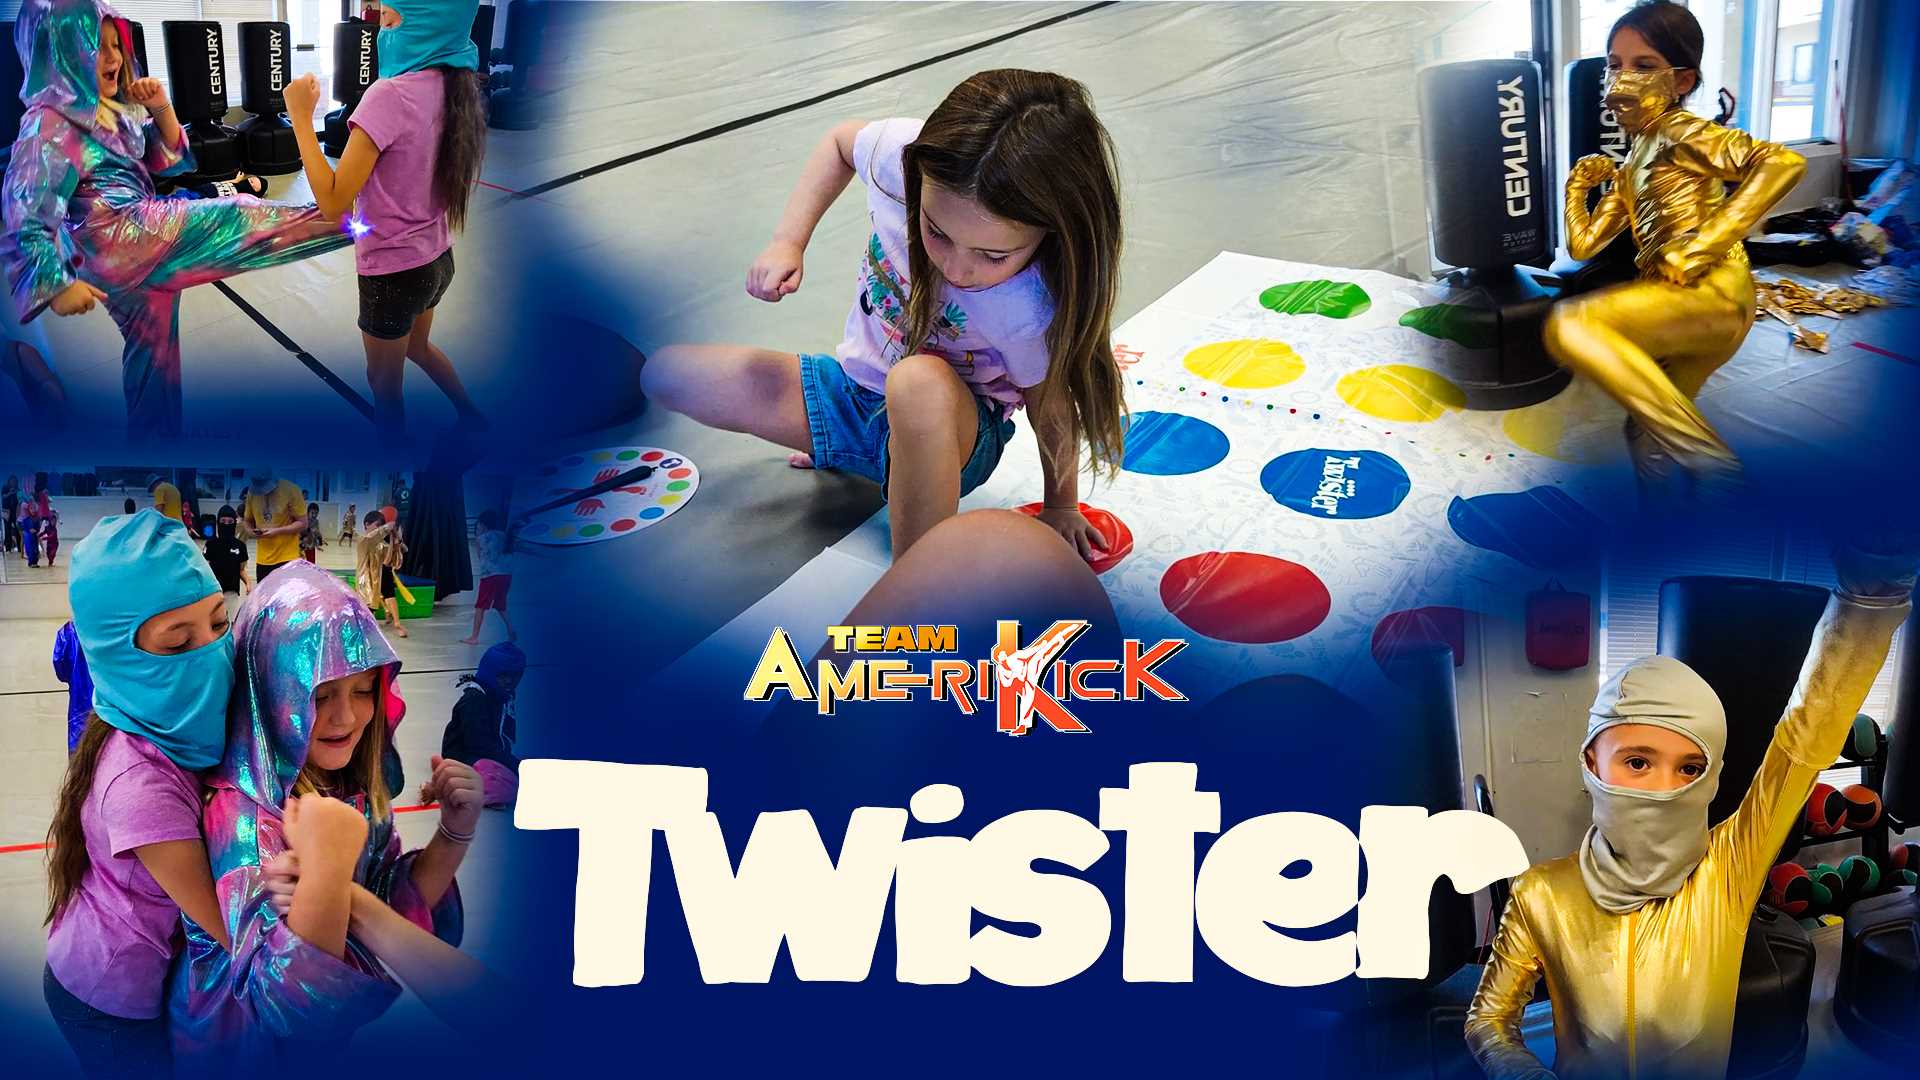 Amerikick Action | Team AmeriKick: TWISTER